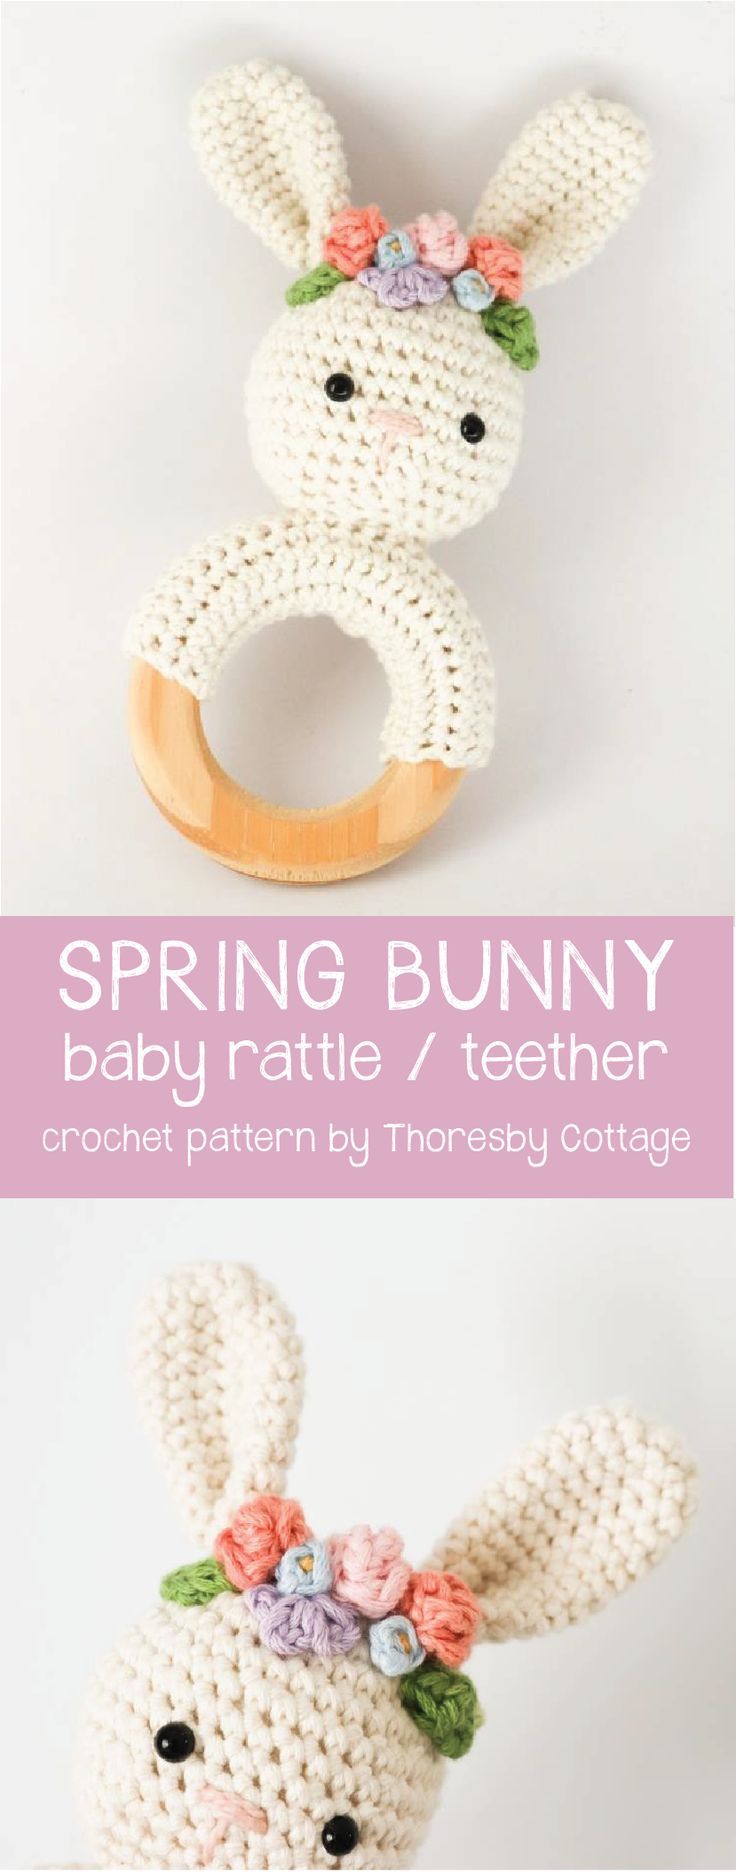 Spring bunny rattle crochet pattern